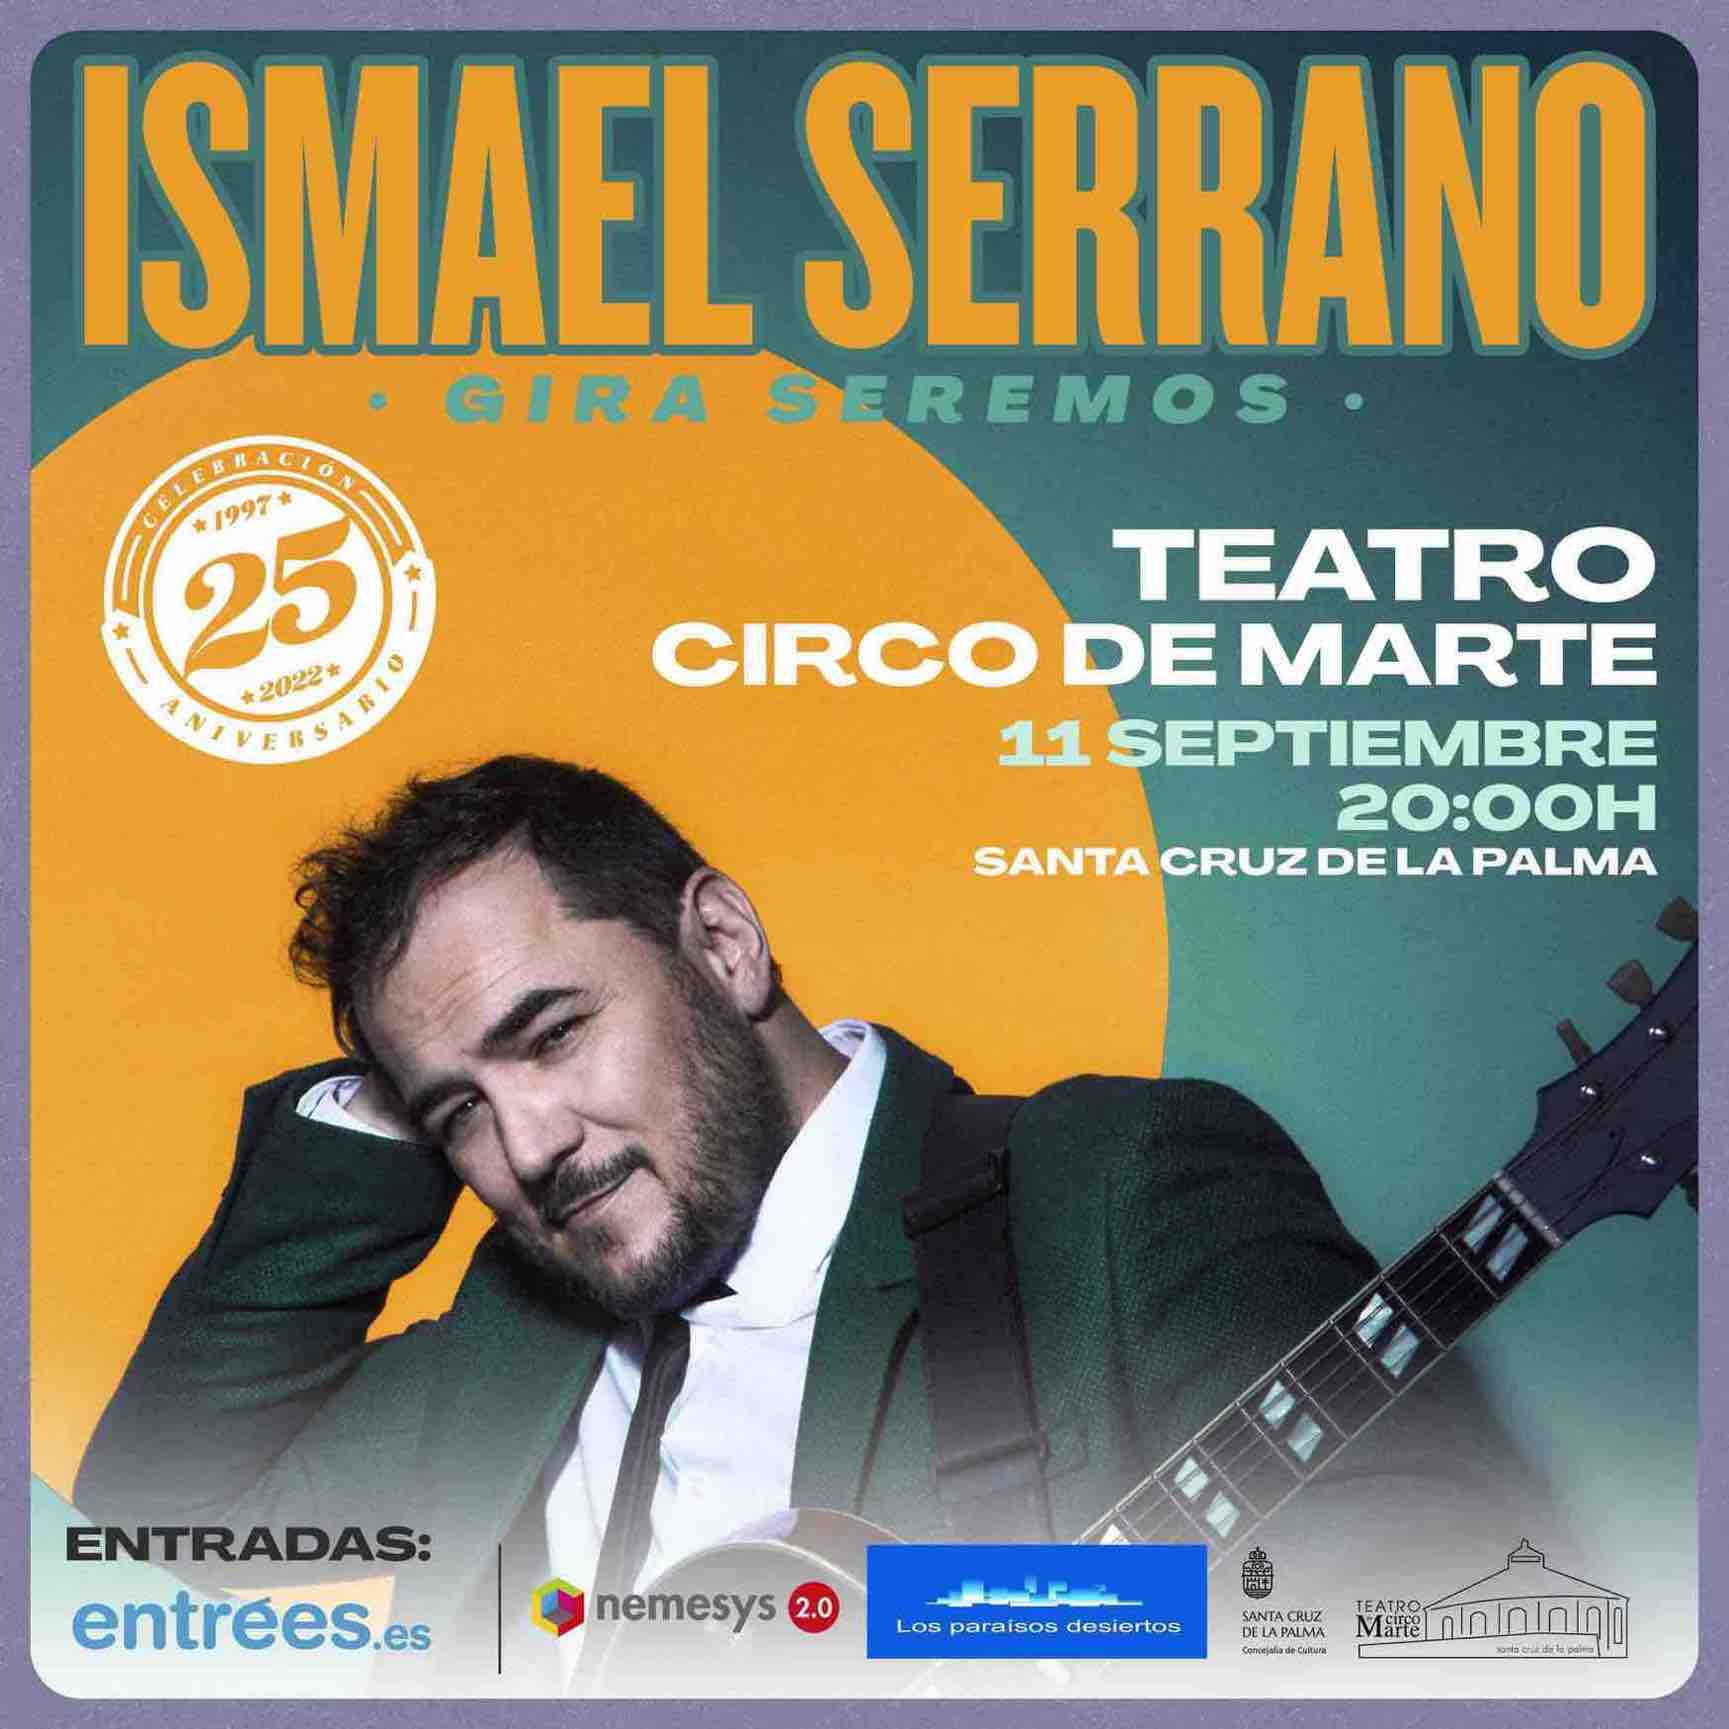 Ismael Serrano trae su gira ‘Seremos’ a Santa Cruz de La Palma este domingo